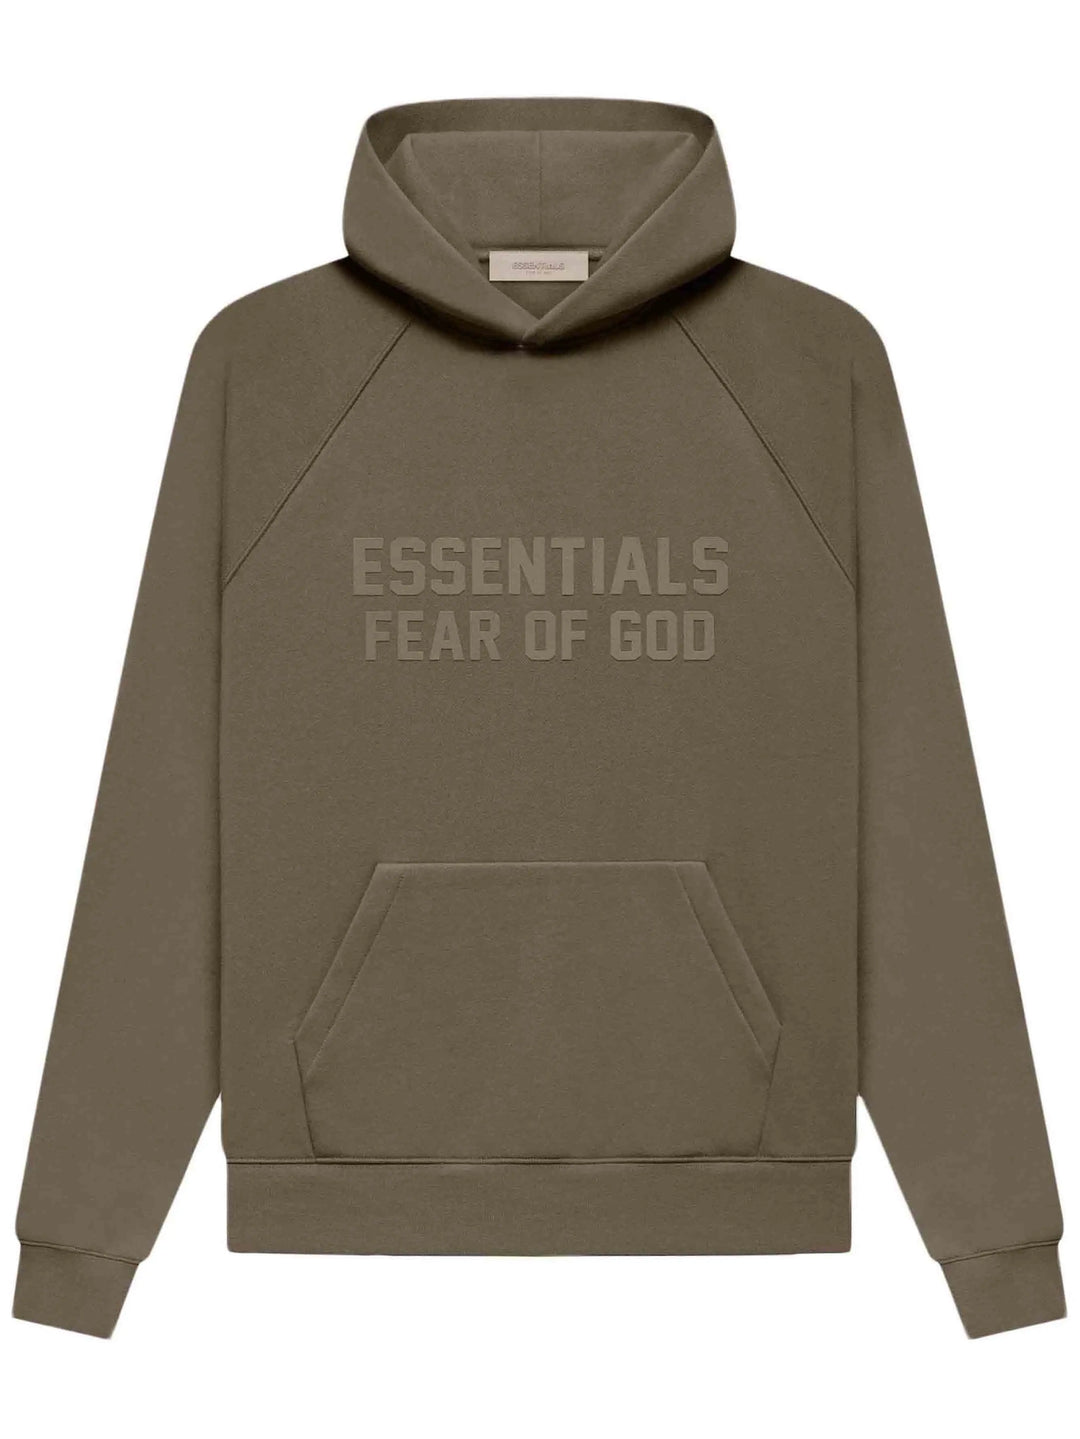 Fear of God Essentials Hoodie Wood Prior